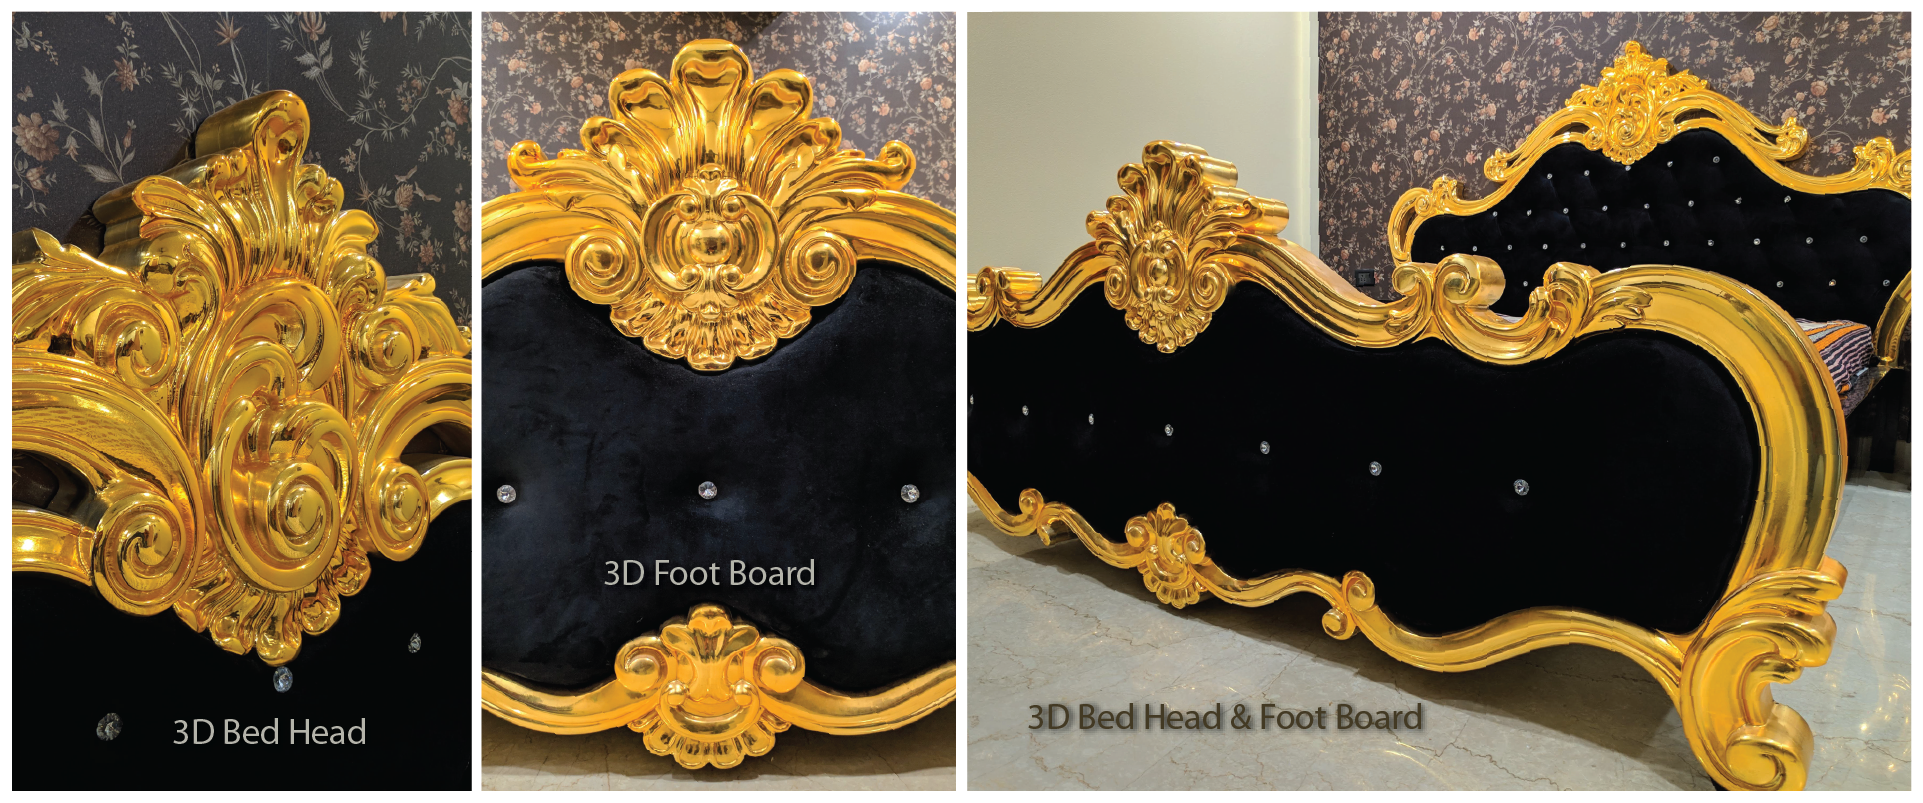 3D_Bed_Head_&_Foot_Board